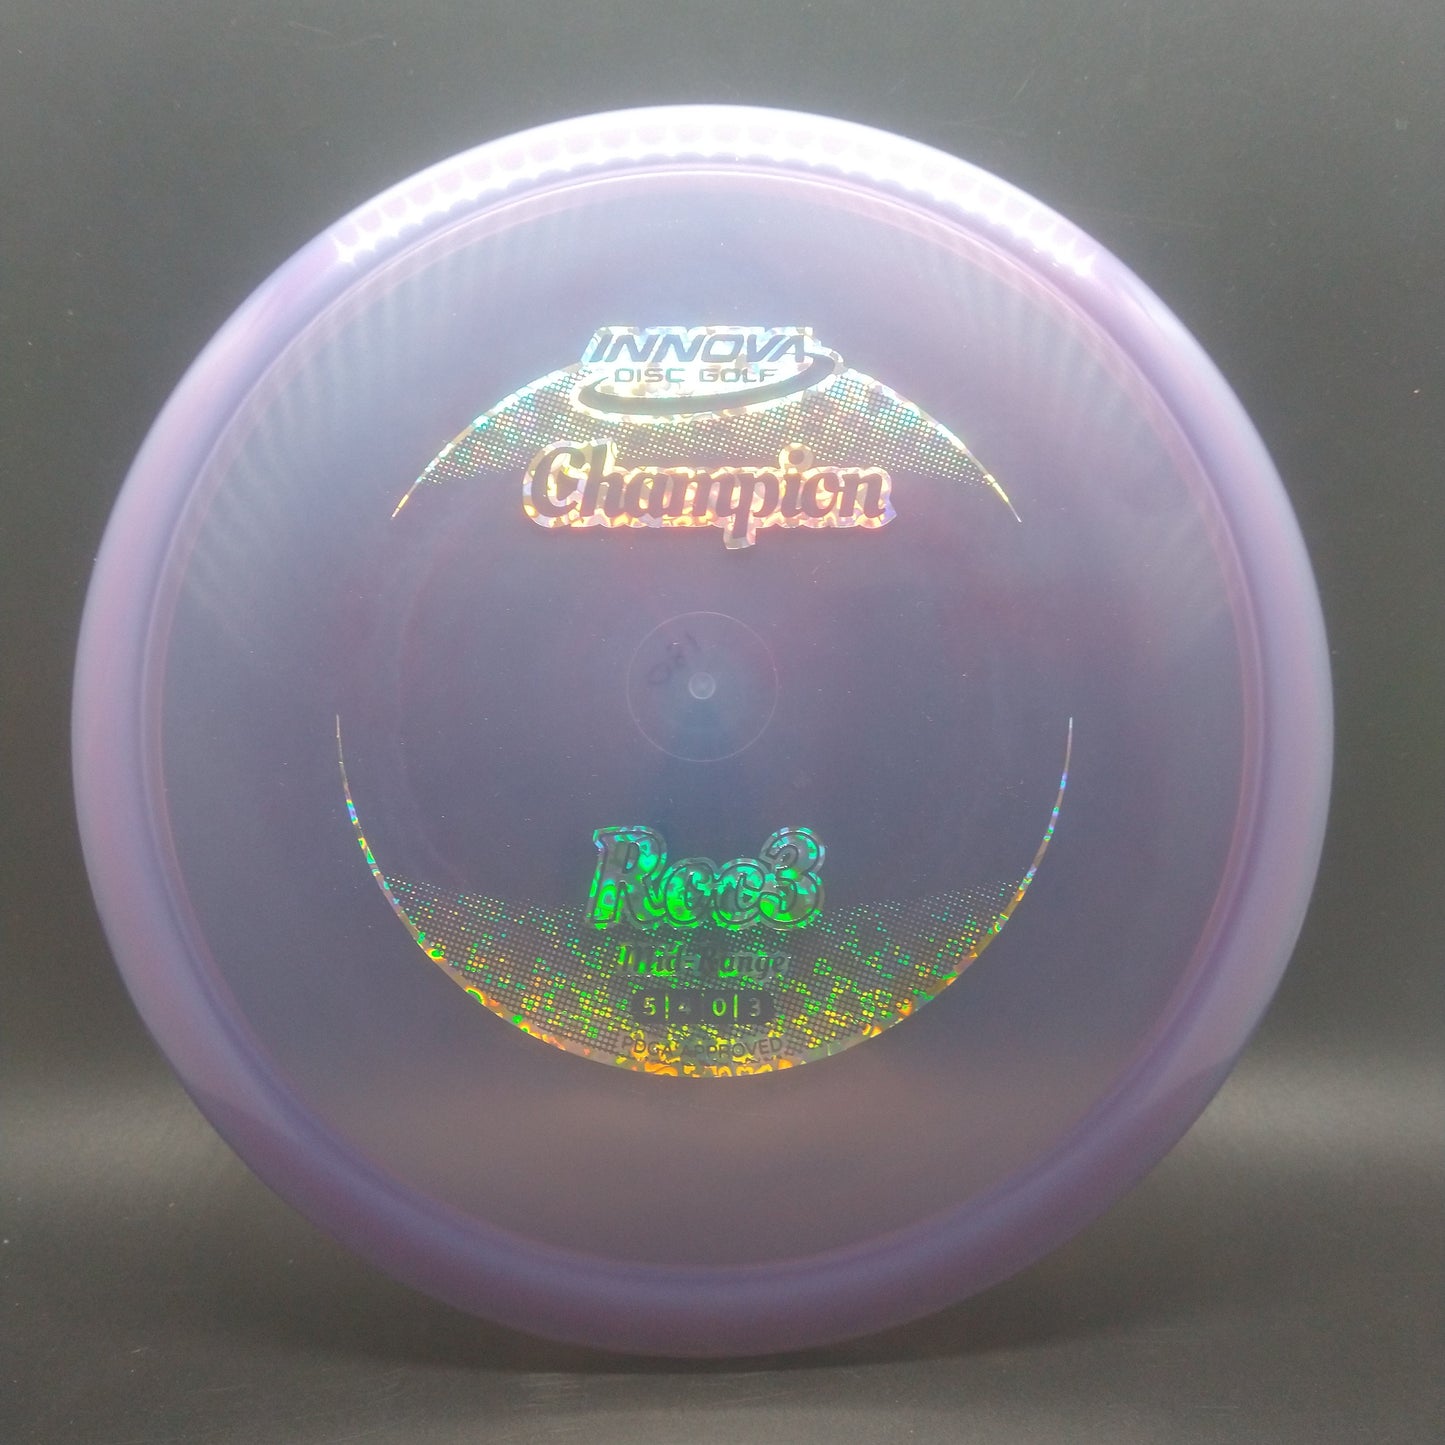 Innova champion Roc3 Purple 180g